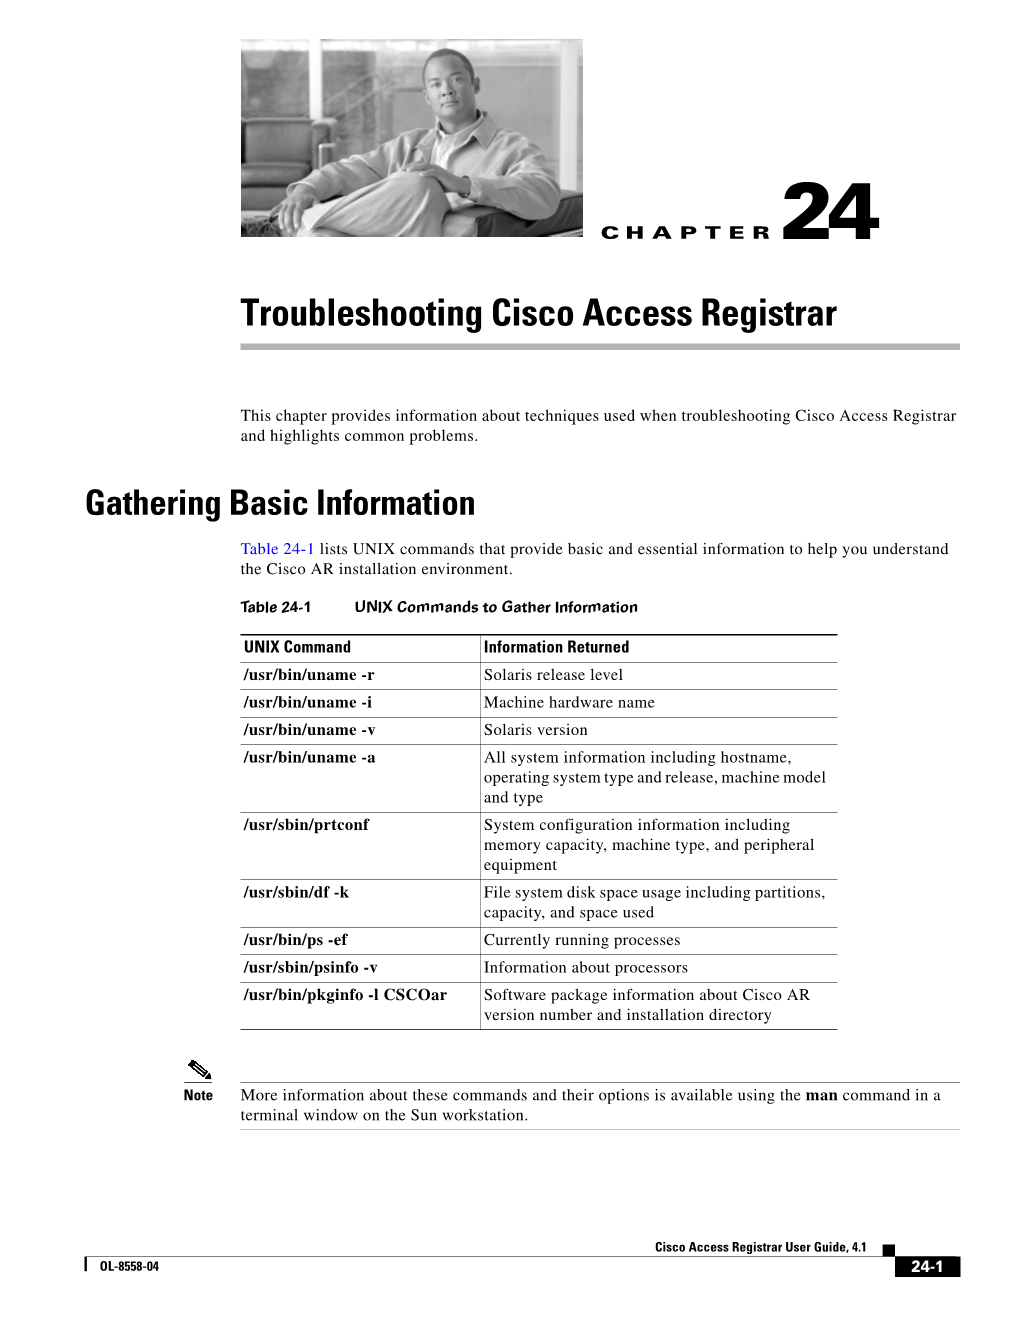 Troubleshooting Cisco Access Registrar